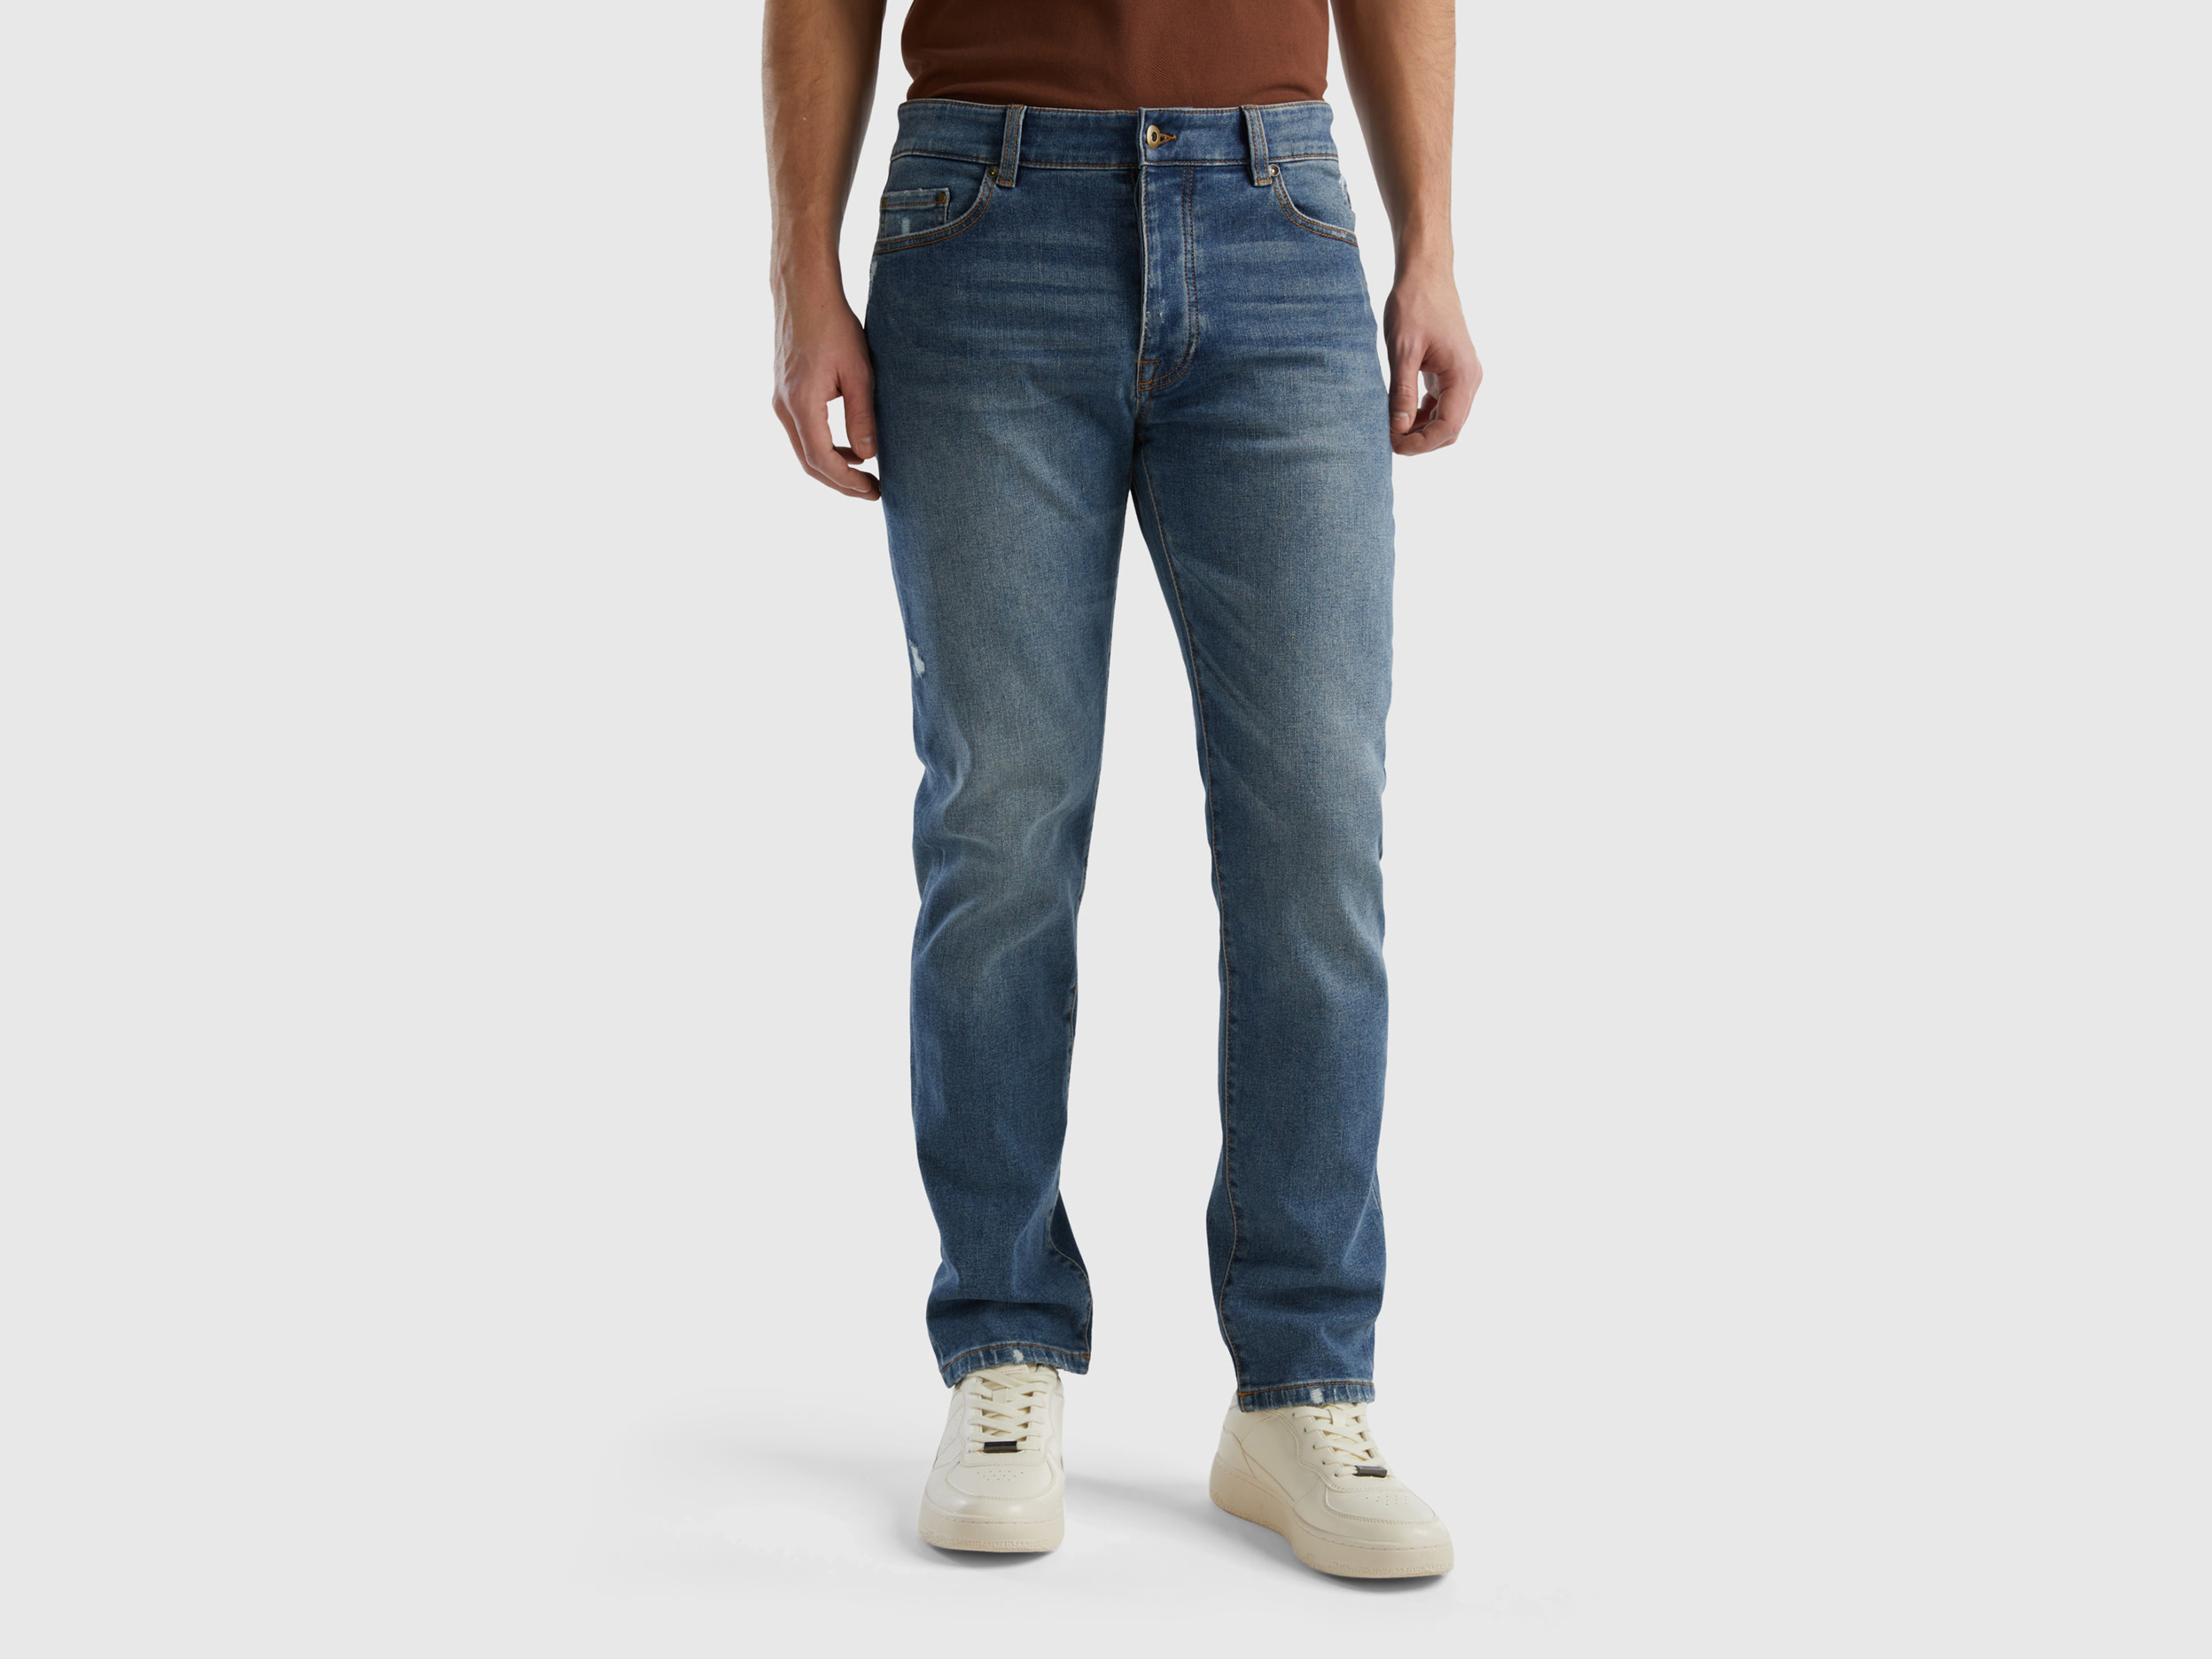 Benetton, Five Pocket Slim Fit Jeans, size 33, Dark Blue, Men